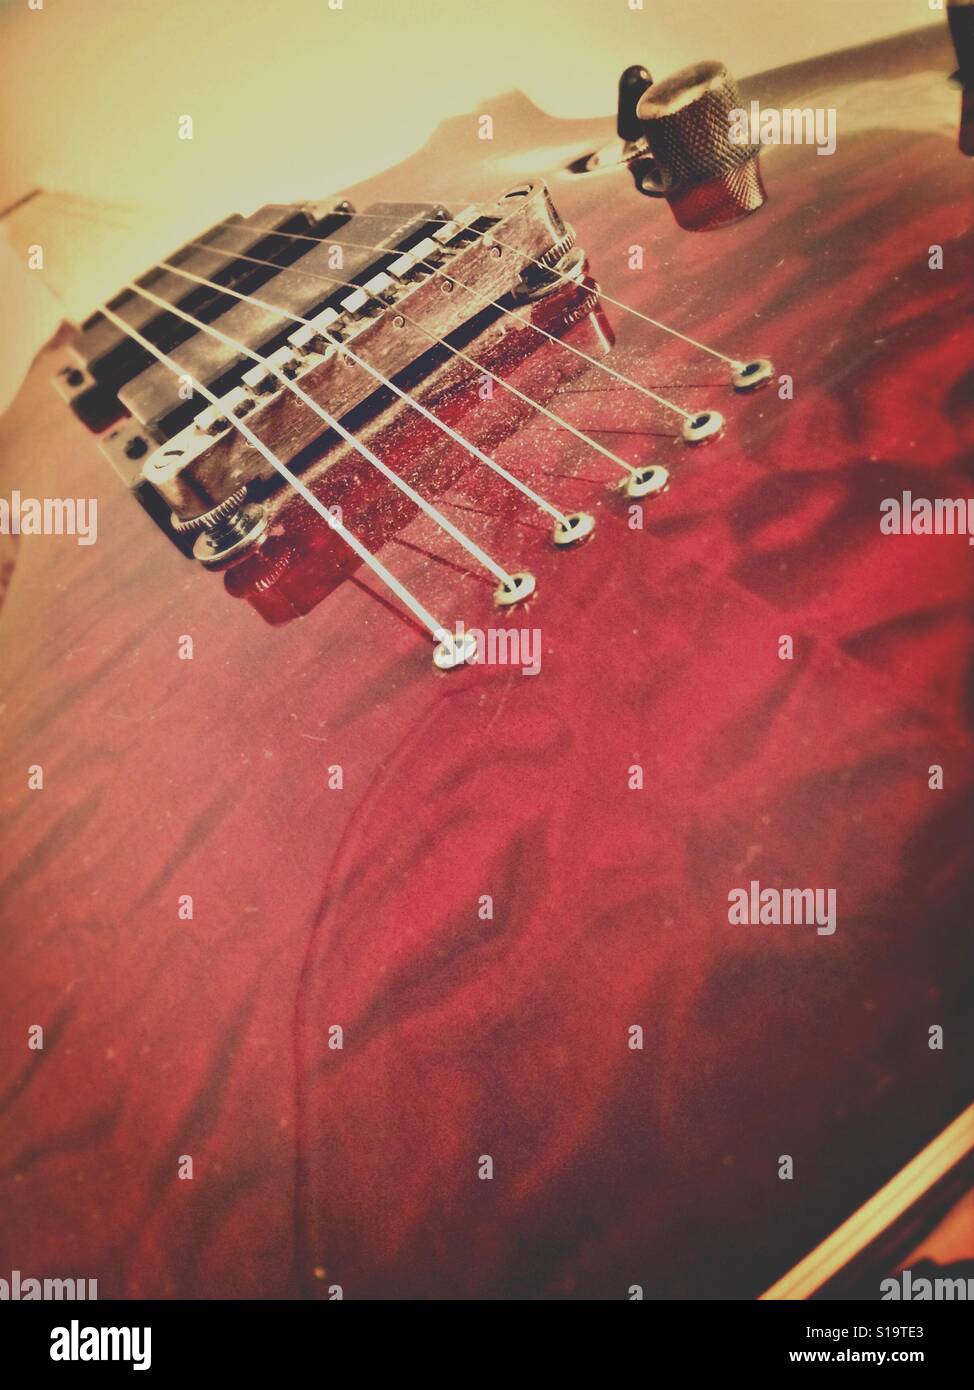 Guitar bridge, pins, saddle and strings Stock Photo